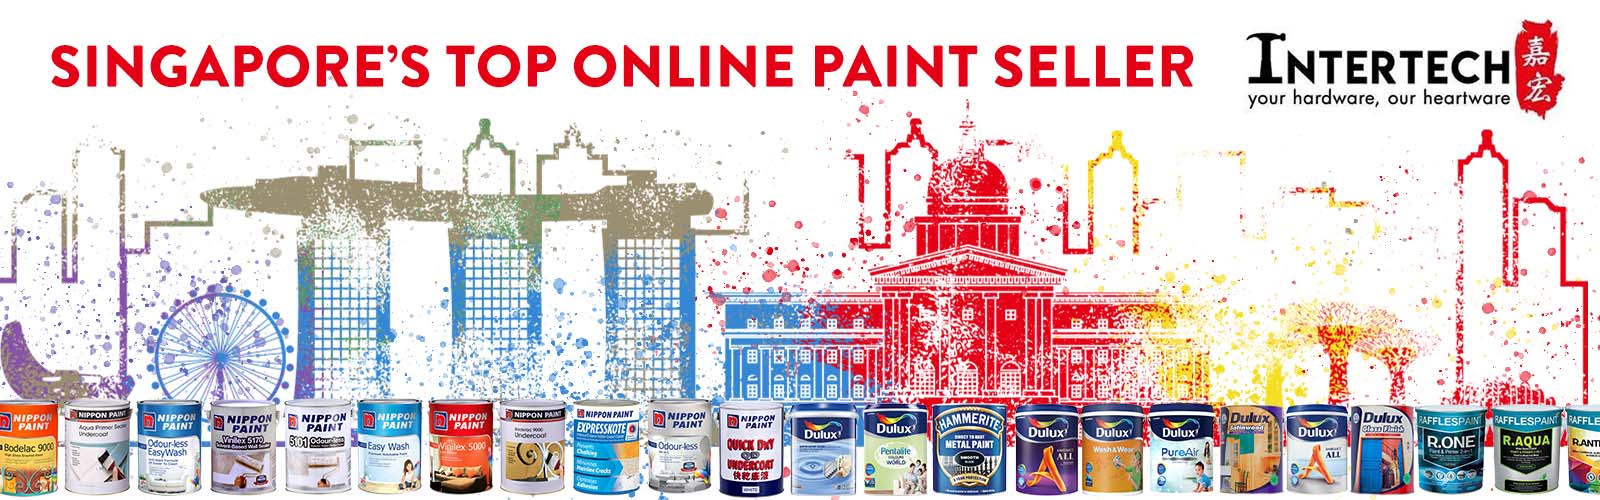 Visit the #1 Online Paint Shop in Singapore